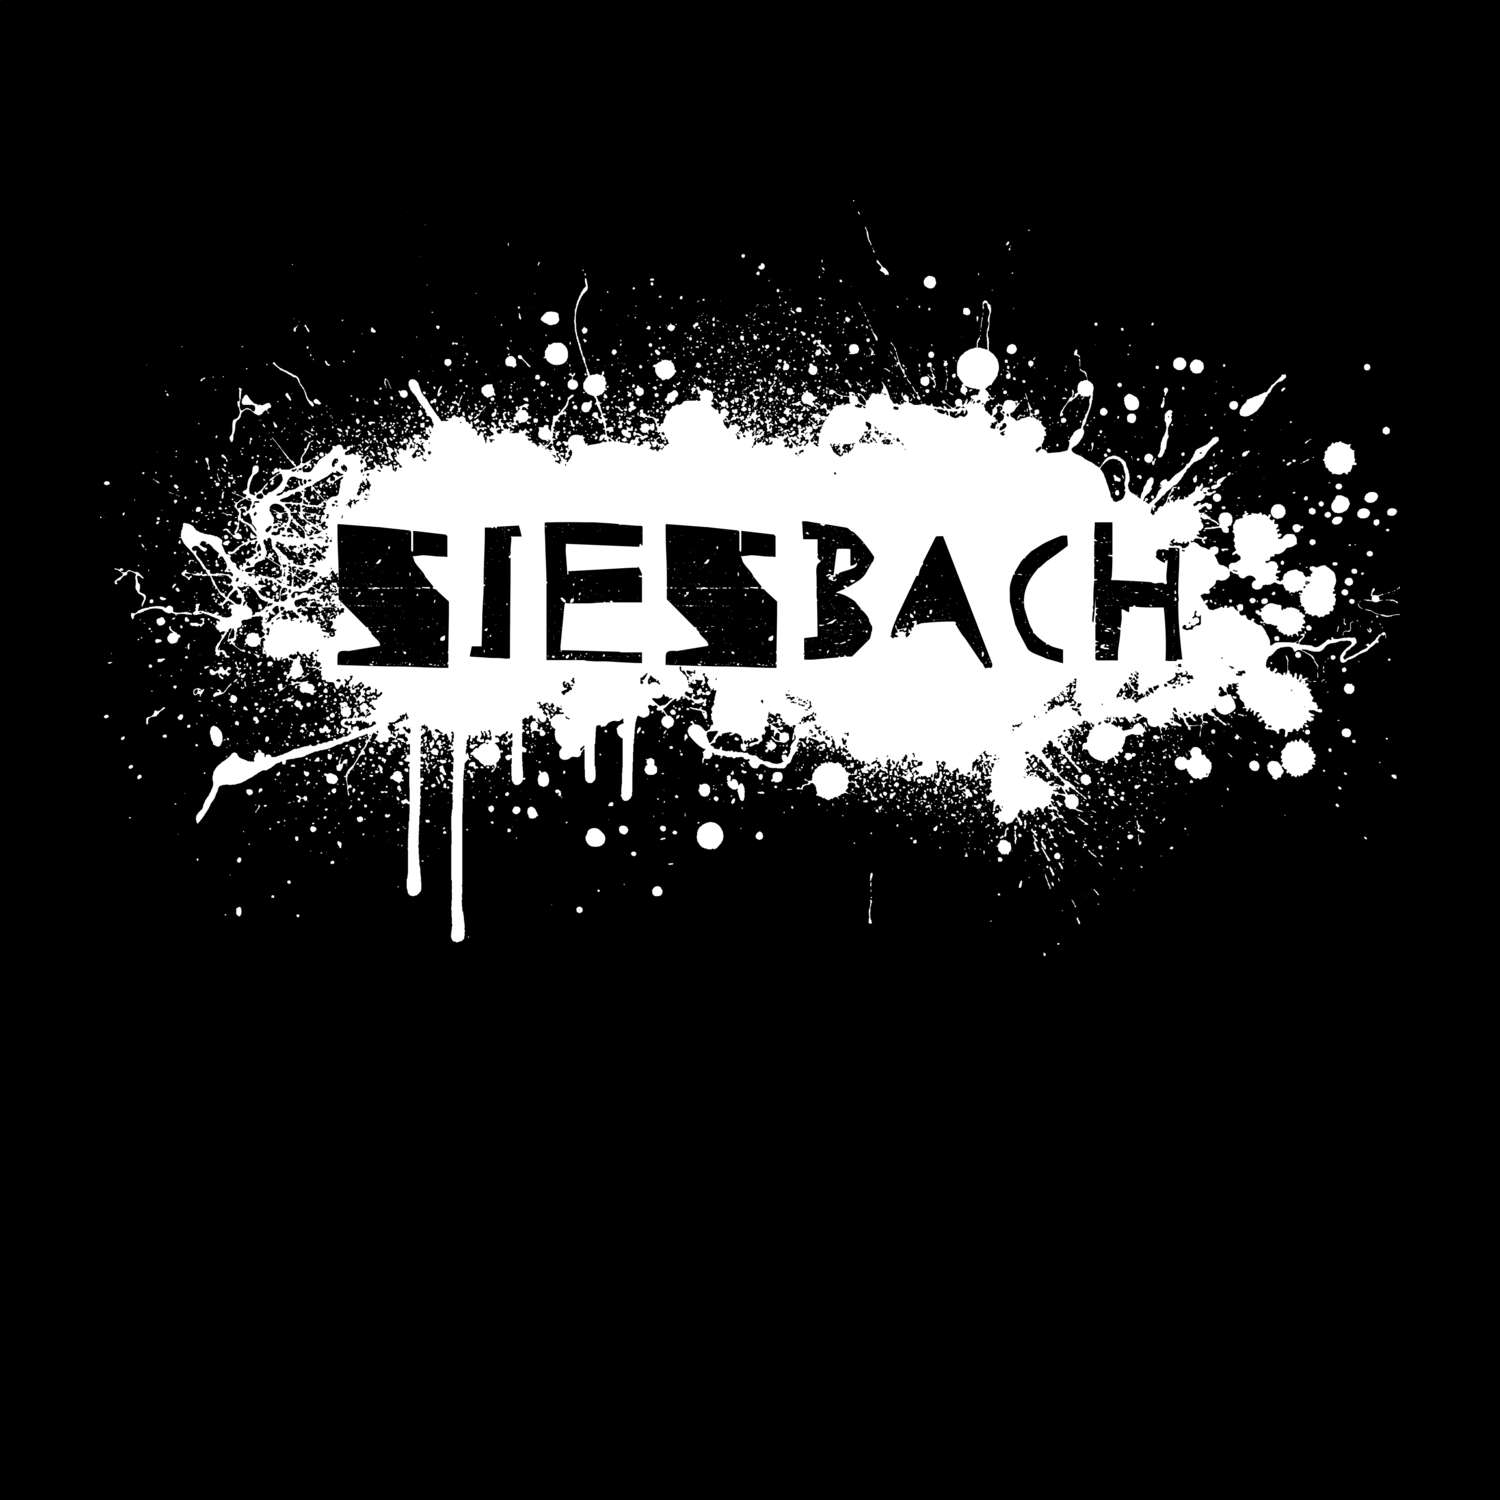 Siesbach T-Shirt »Paint Splash Punk«